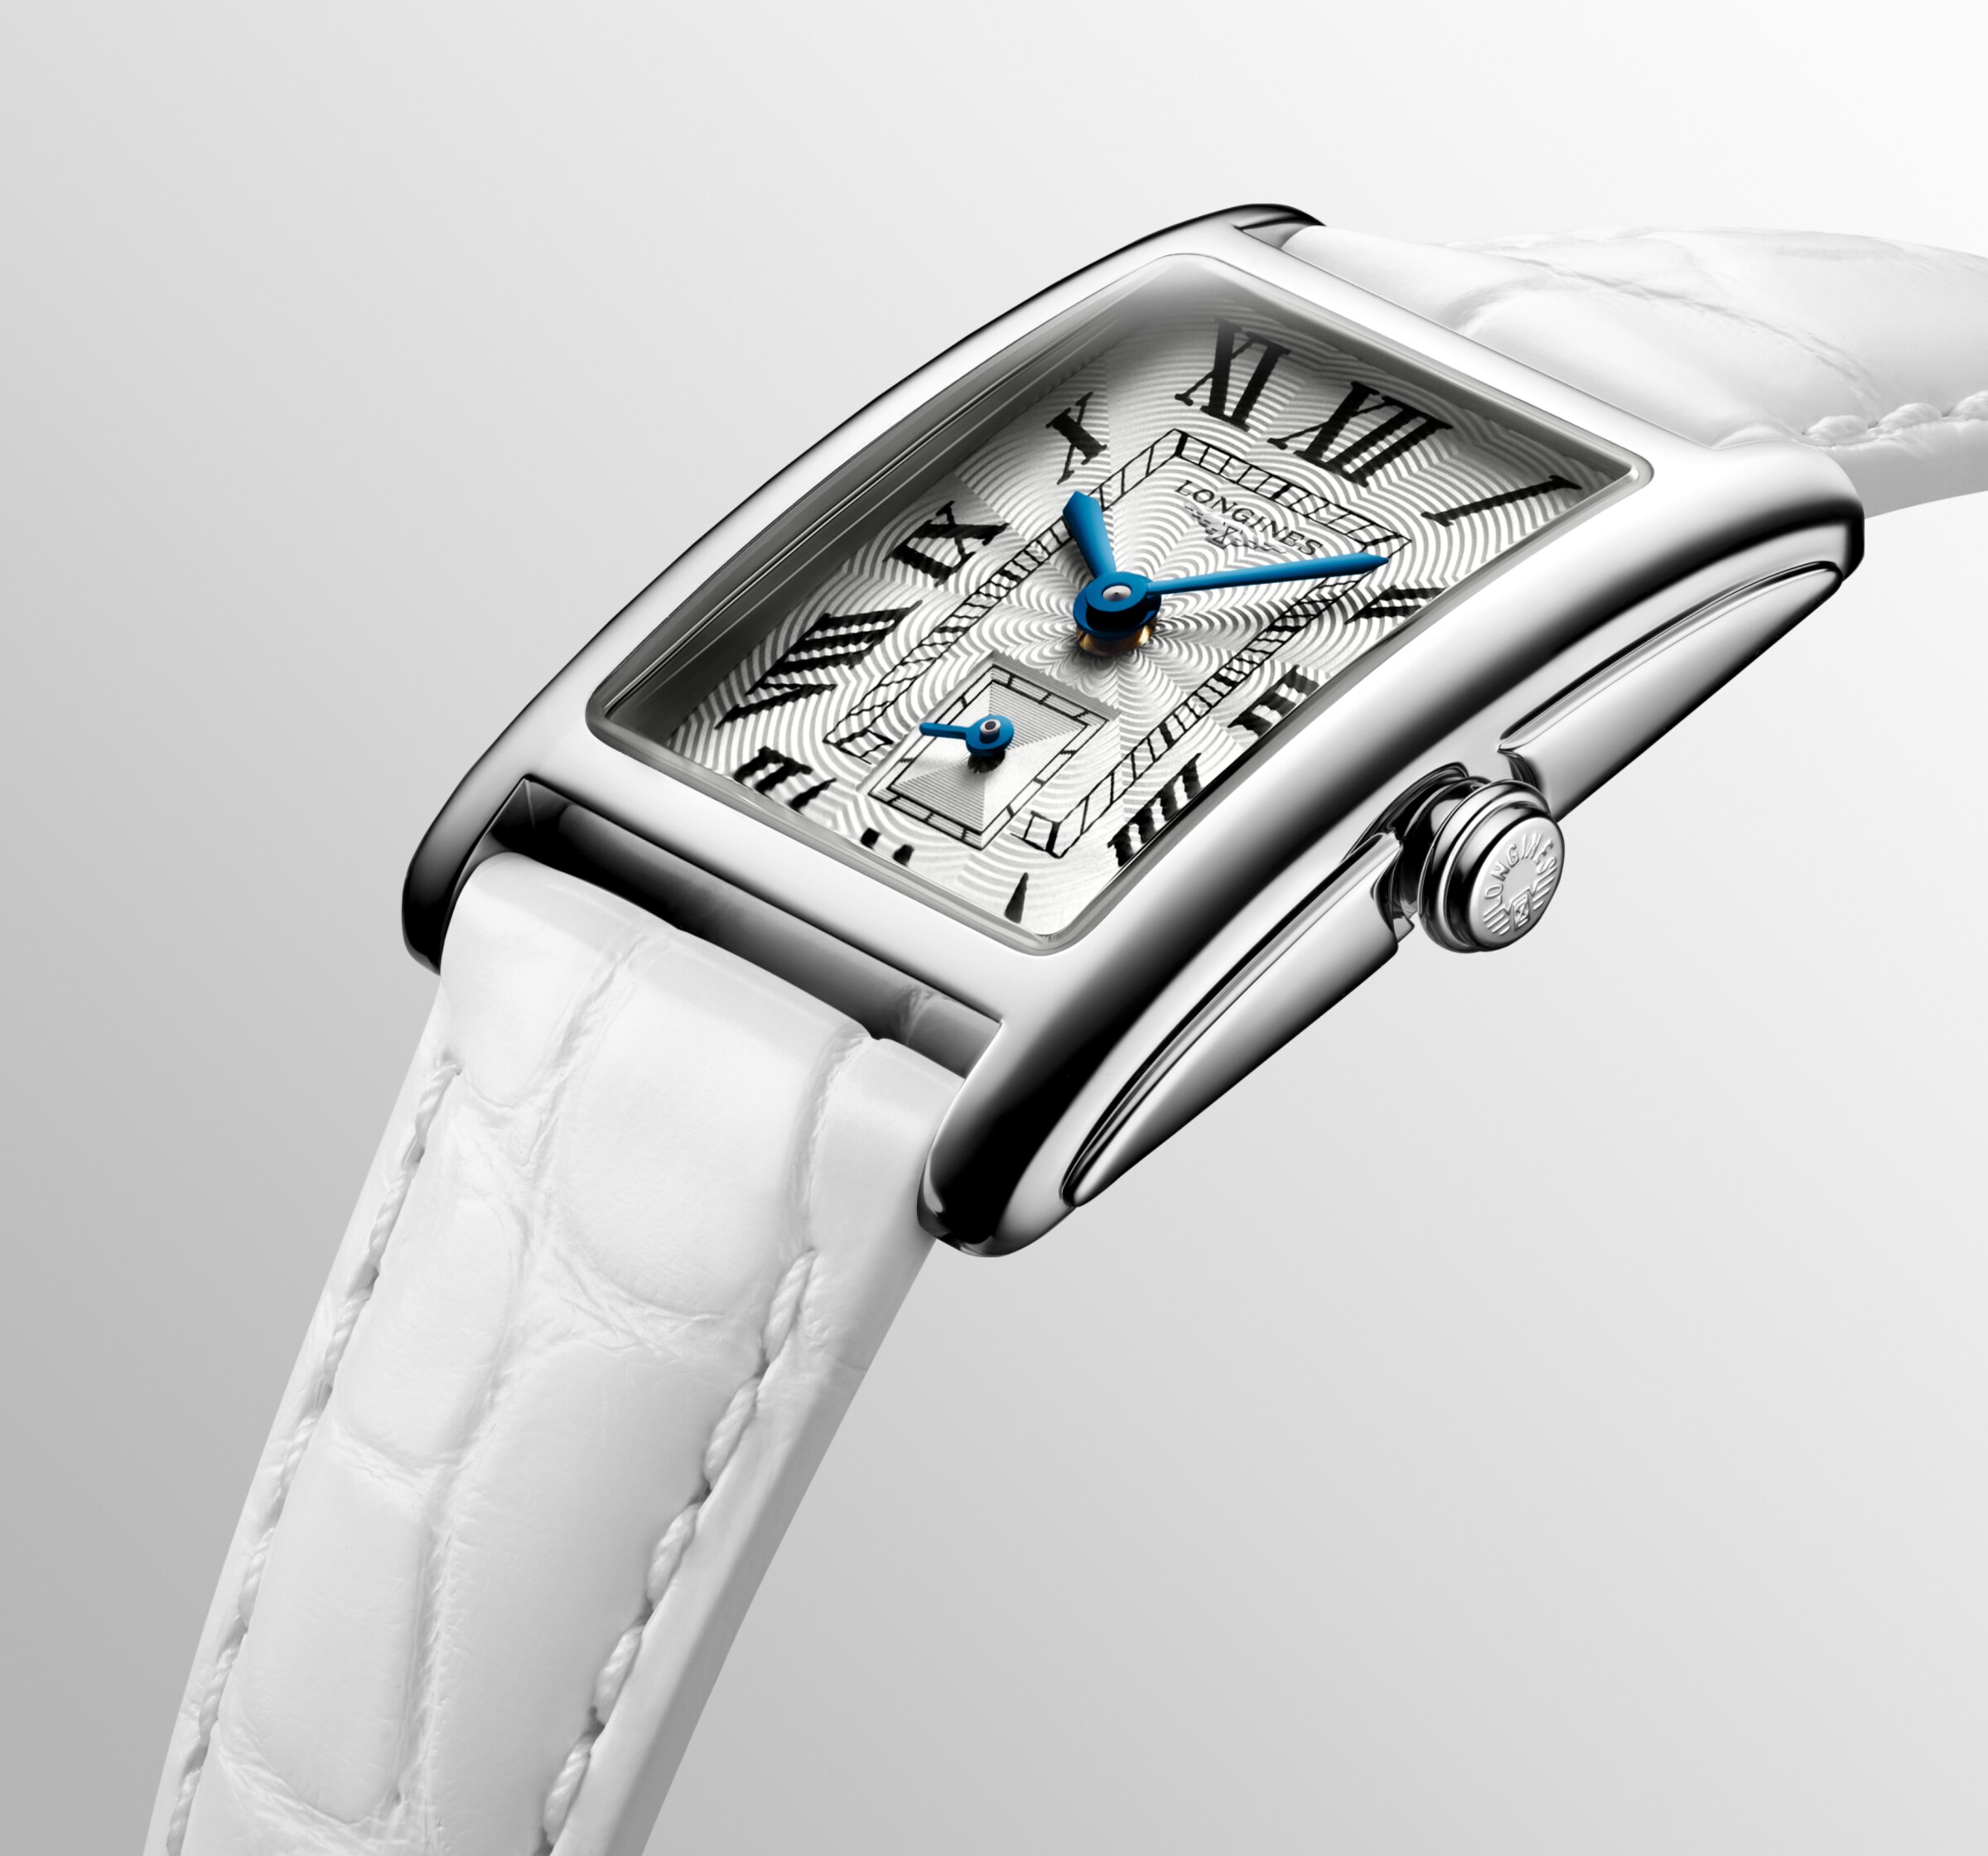 Longines DOLCEVITA Quartz Stainless steel Watch - L5.255.4.71.2